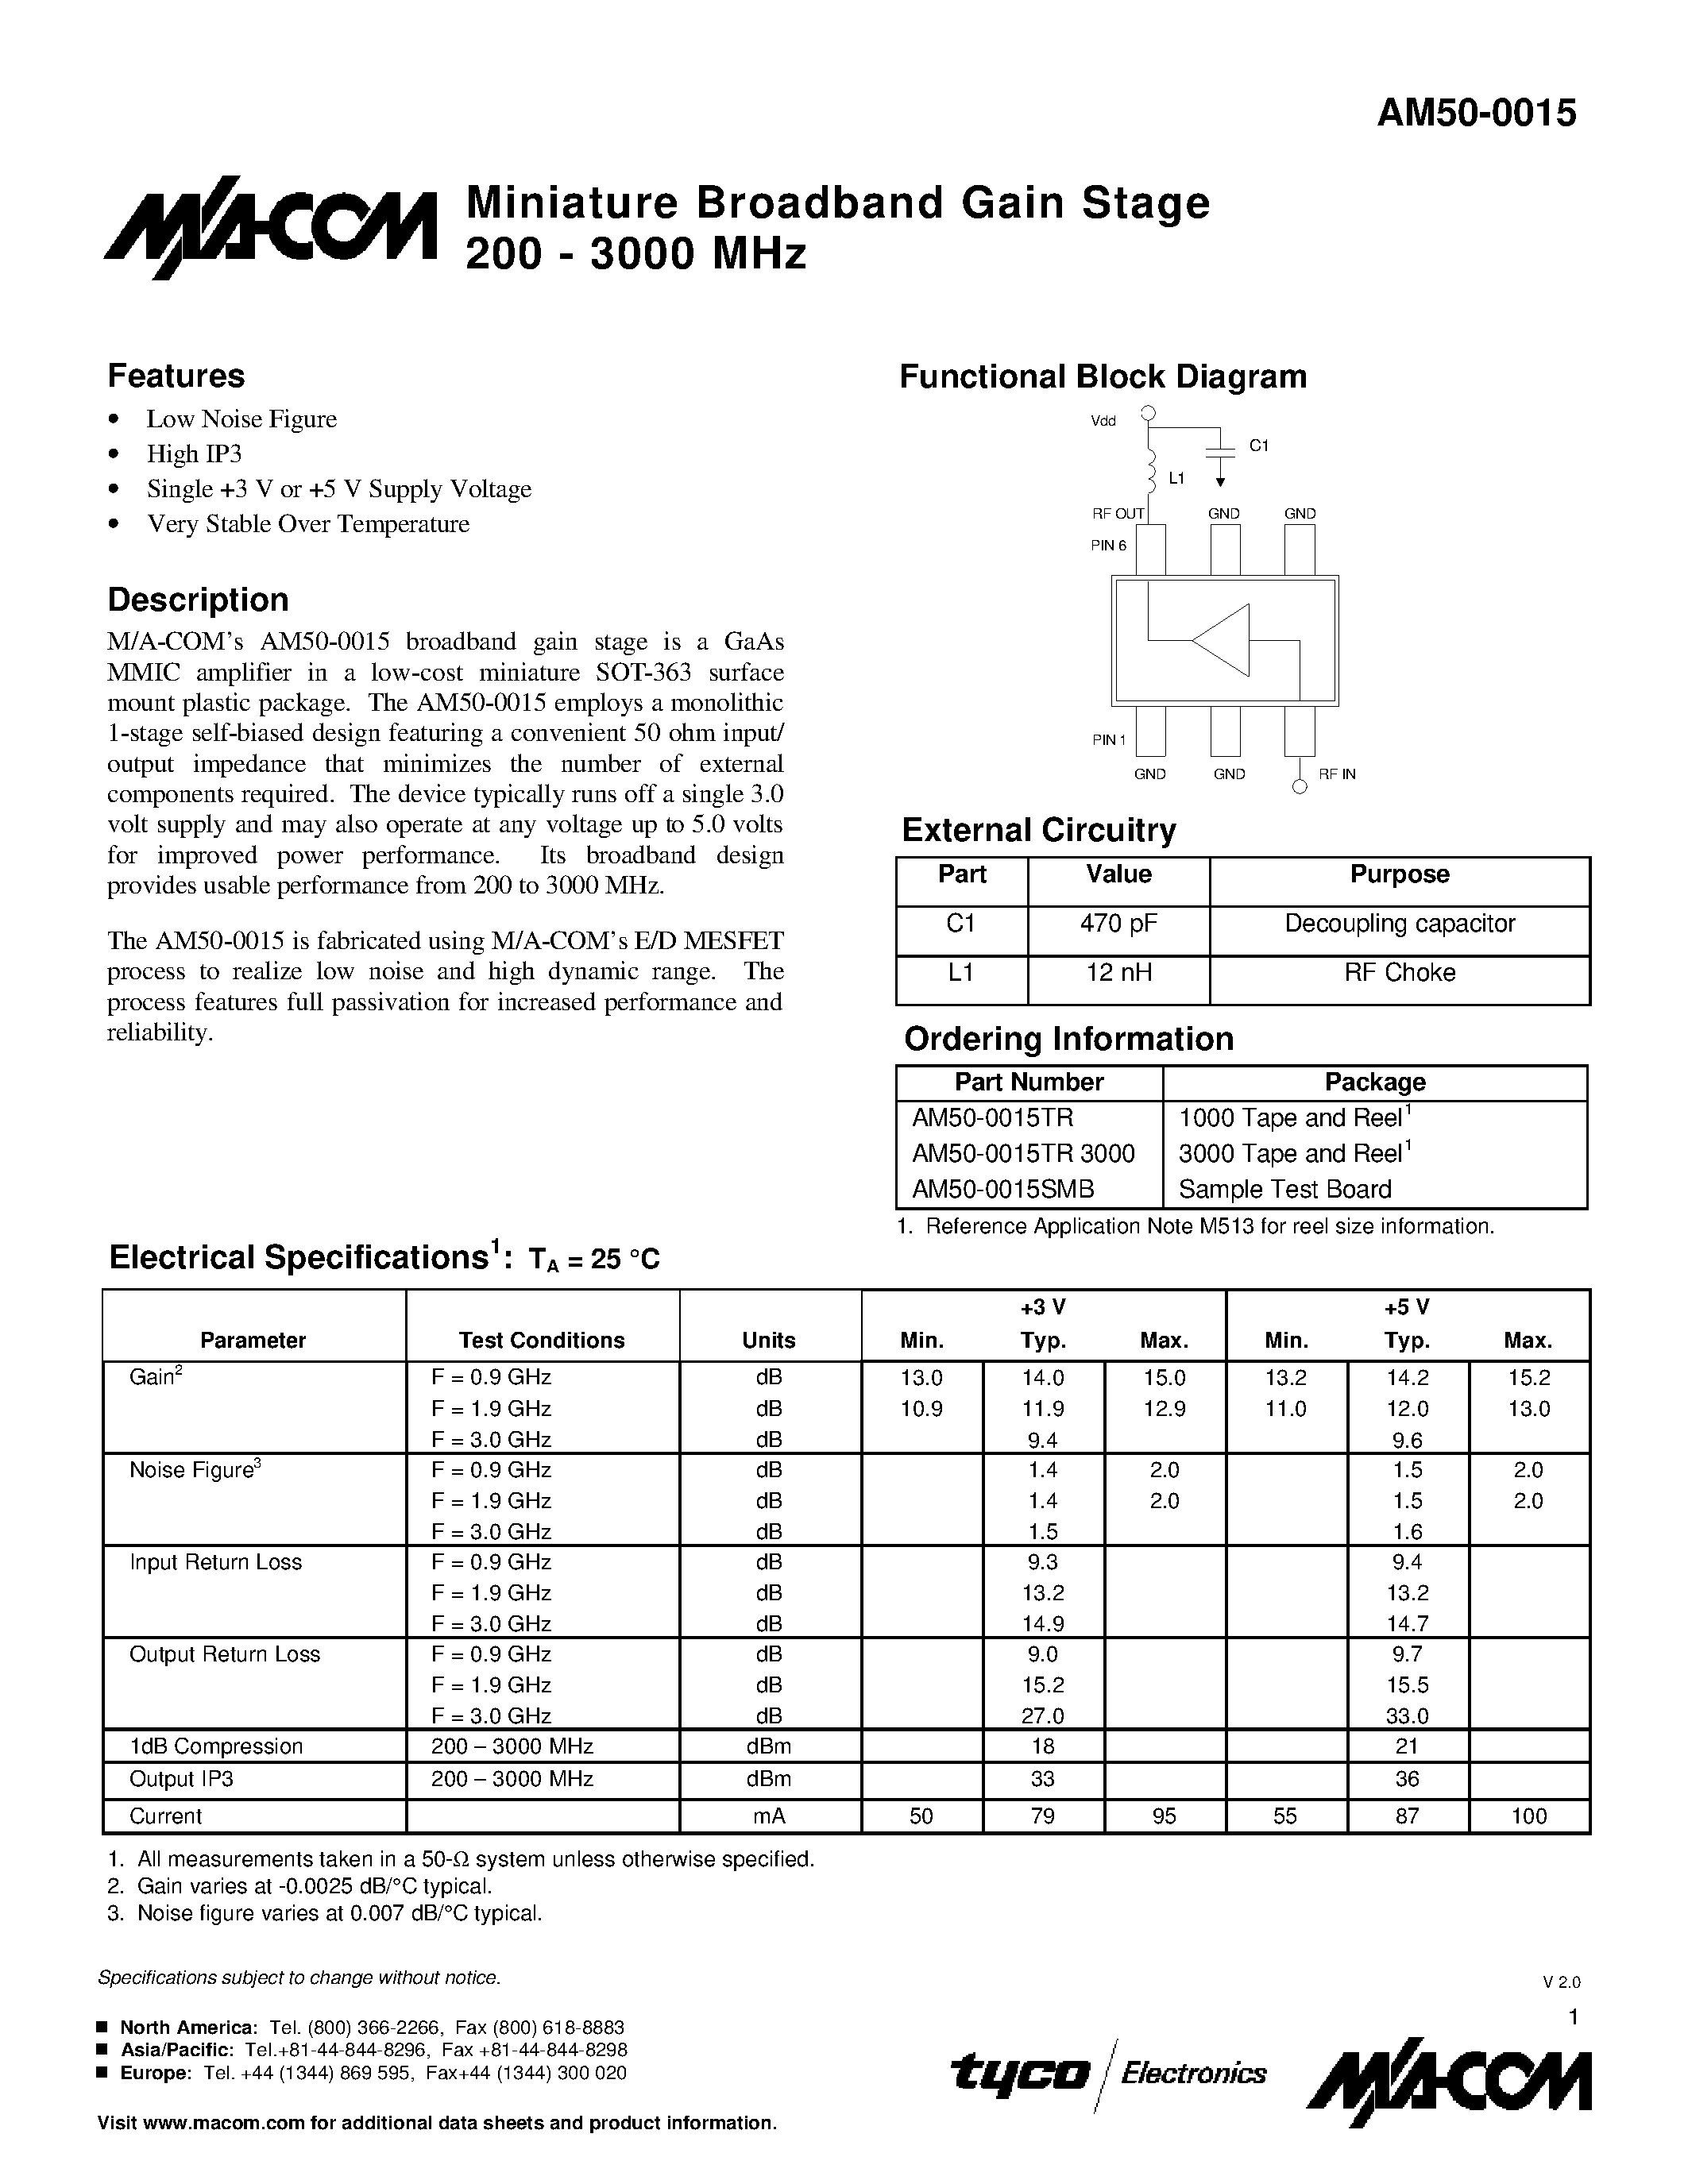 Даташит AM50-0015 - Miniature Broadband Gain Stage 200 - 3000 MHz страница 1